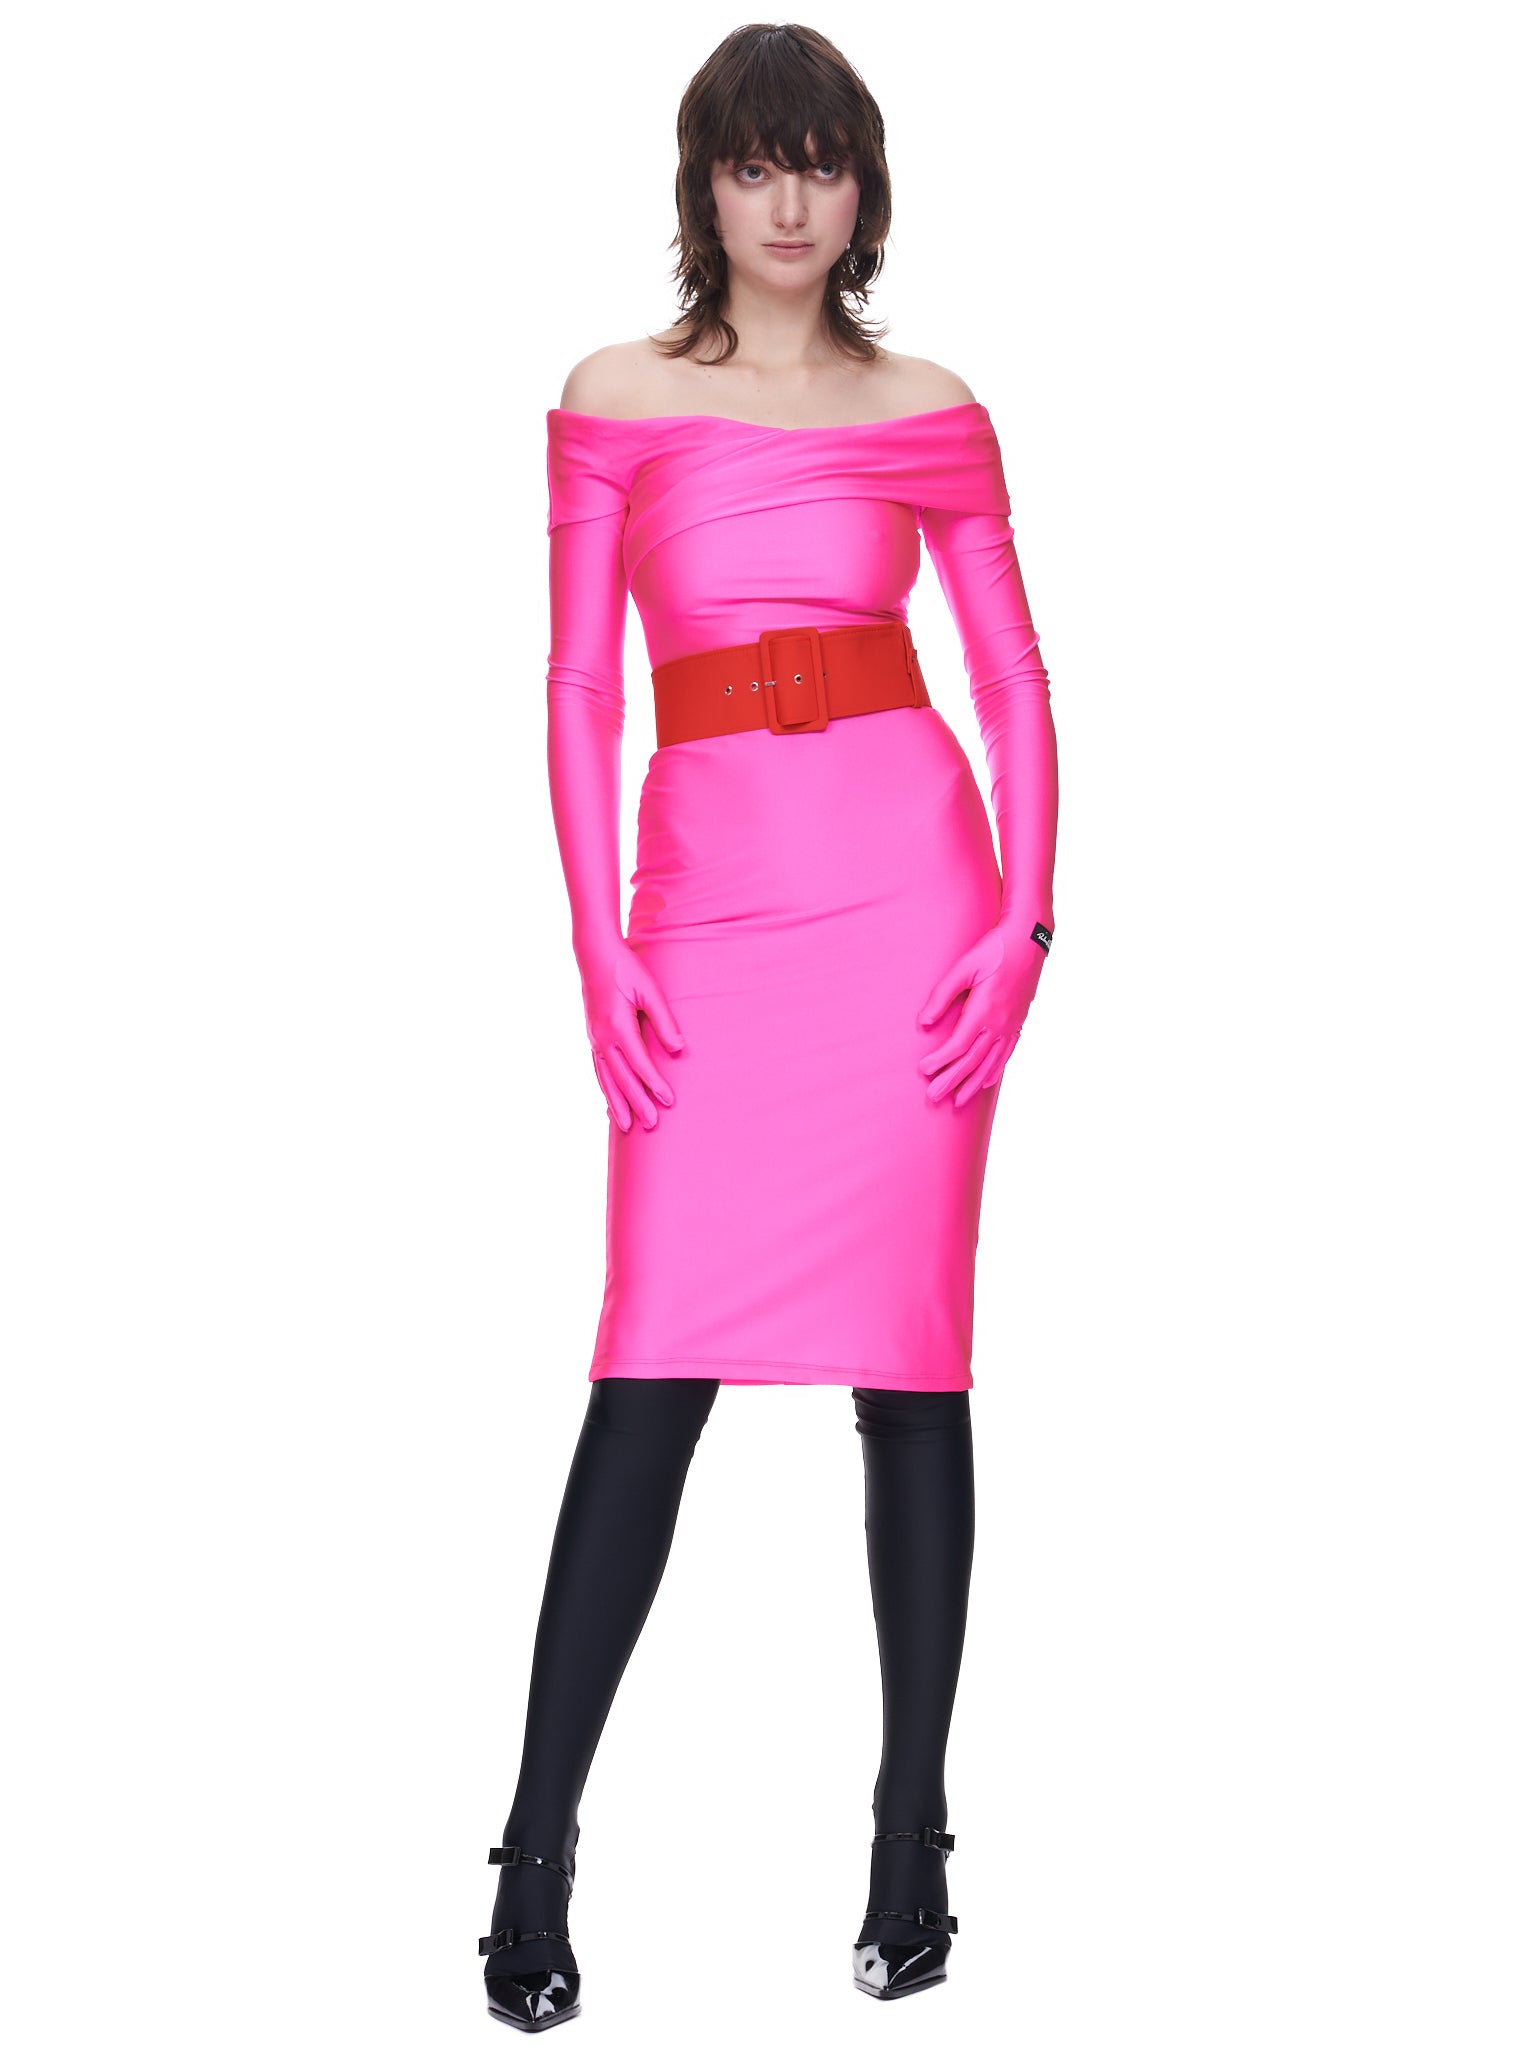 Barb Gloved Dress (21-PINK)